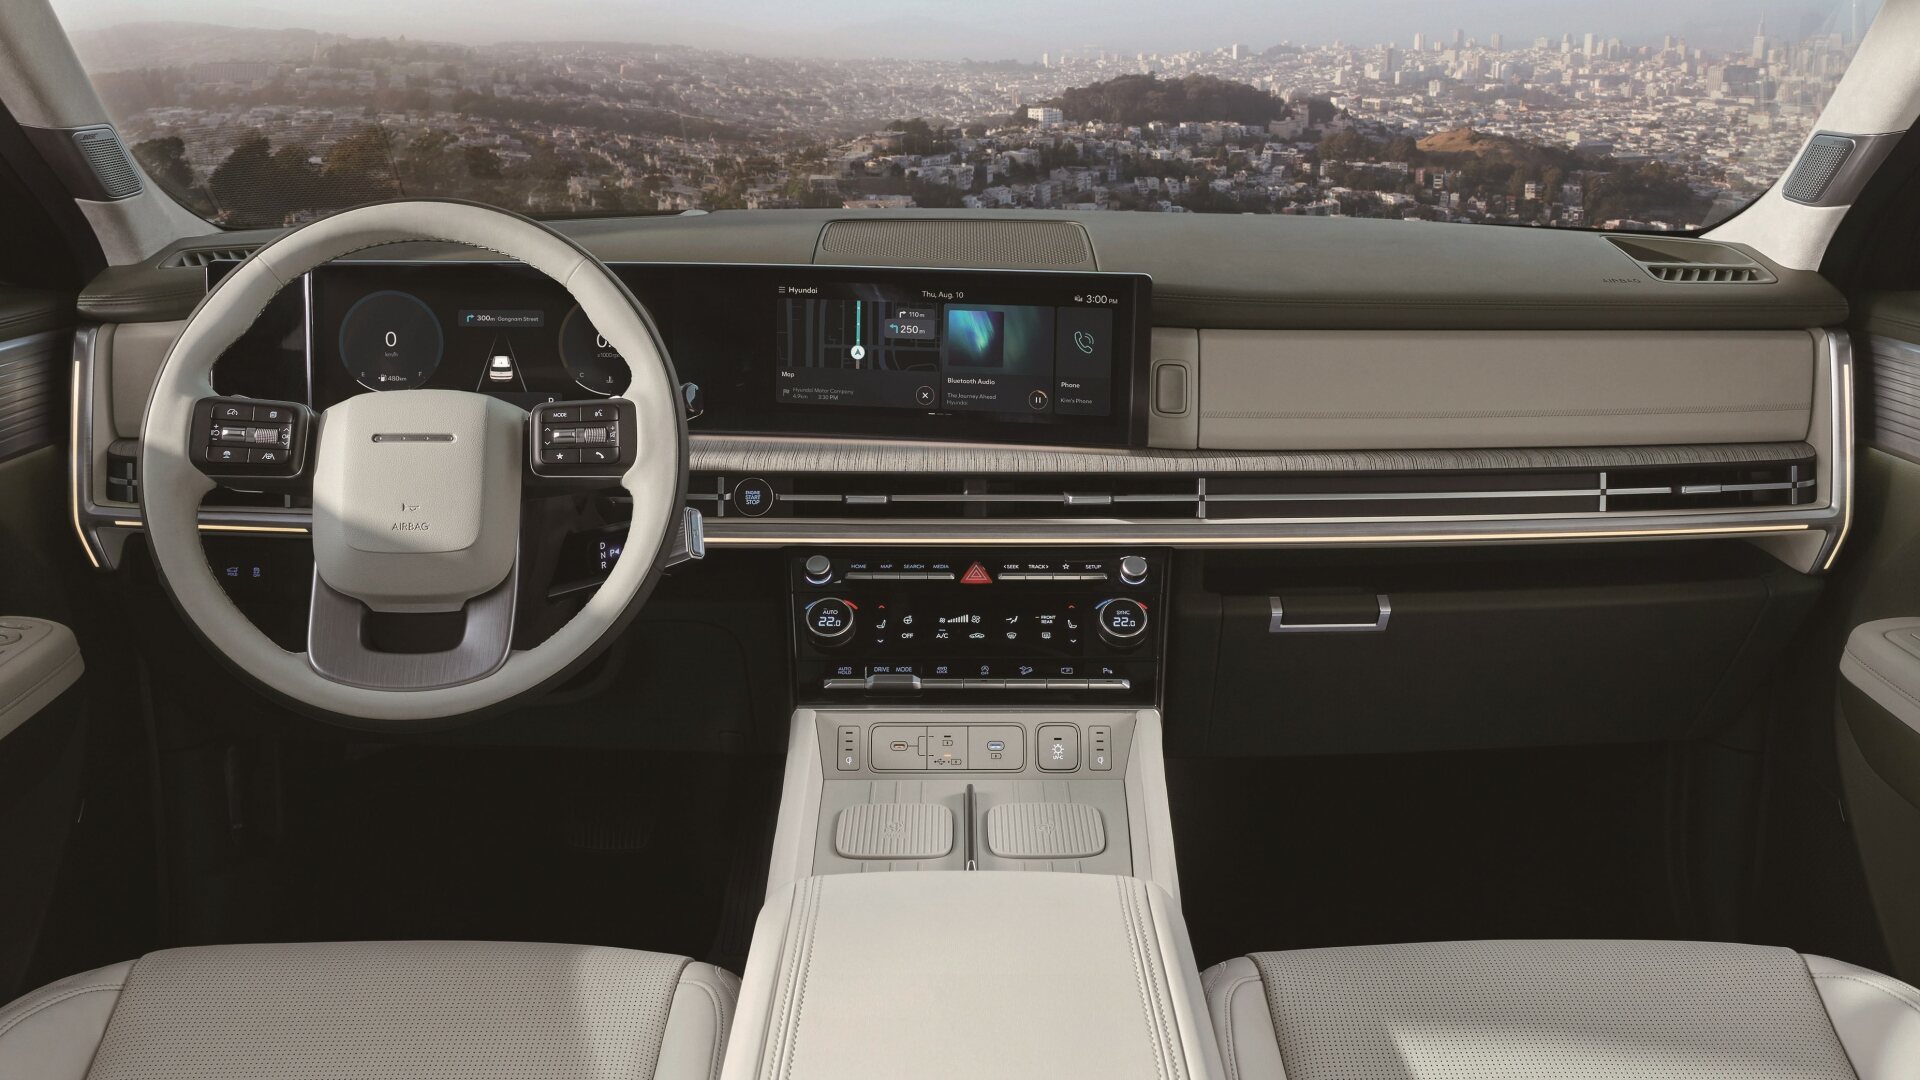 The Interior, Steering, Dashboard, And Central Console Of A Hyundai Santa Fe (Credits: Hyundai Santa Fe e-Brochure)